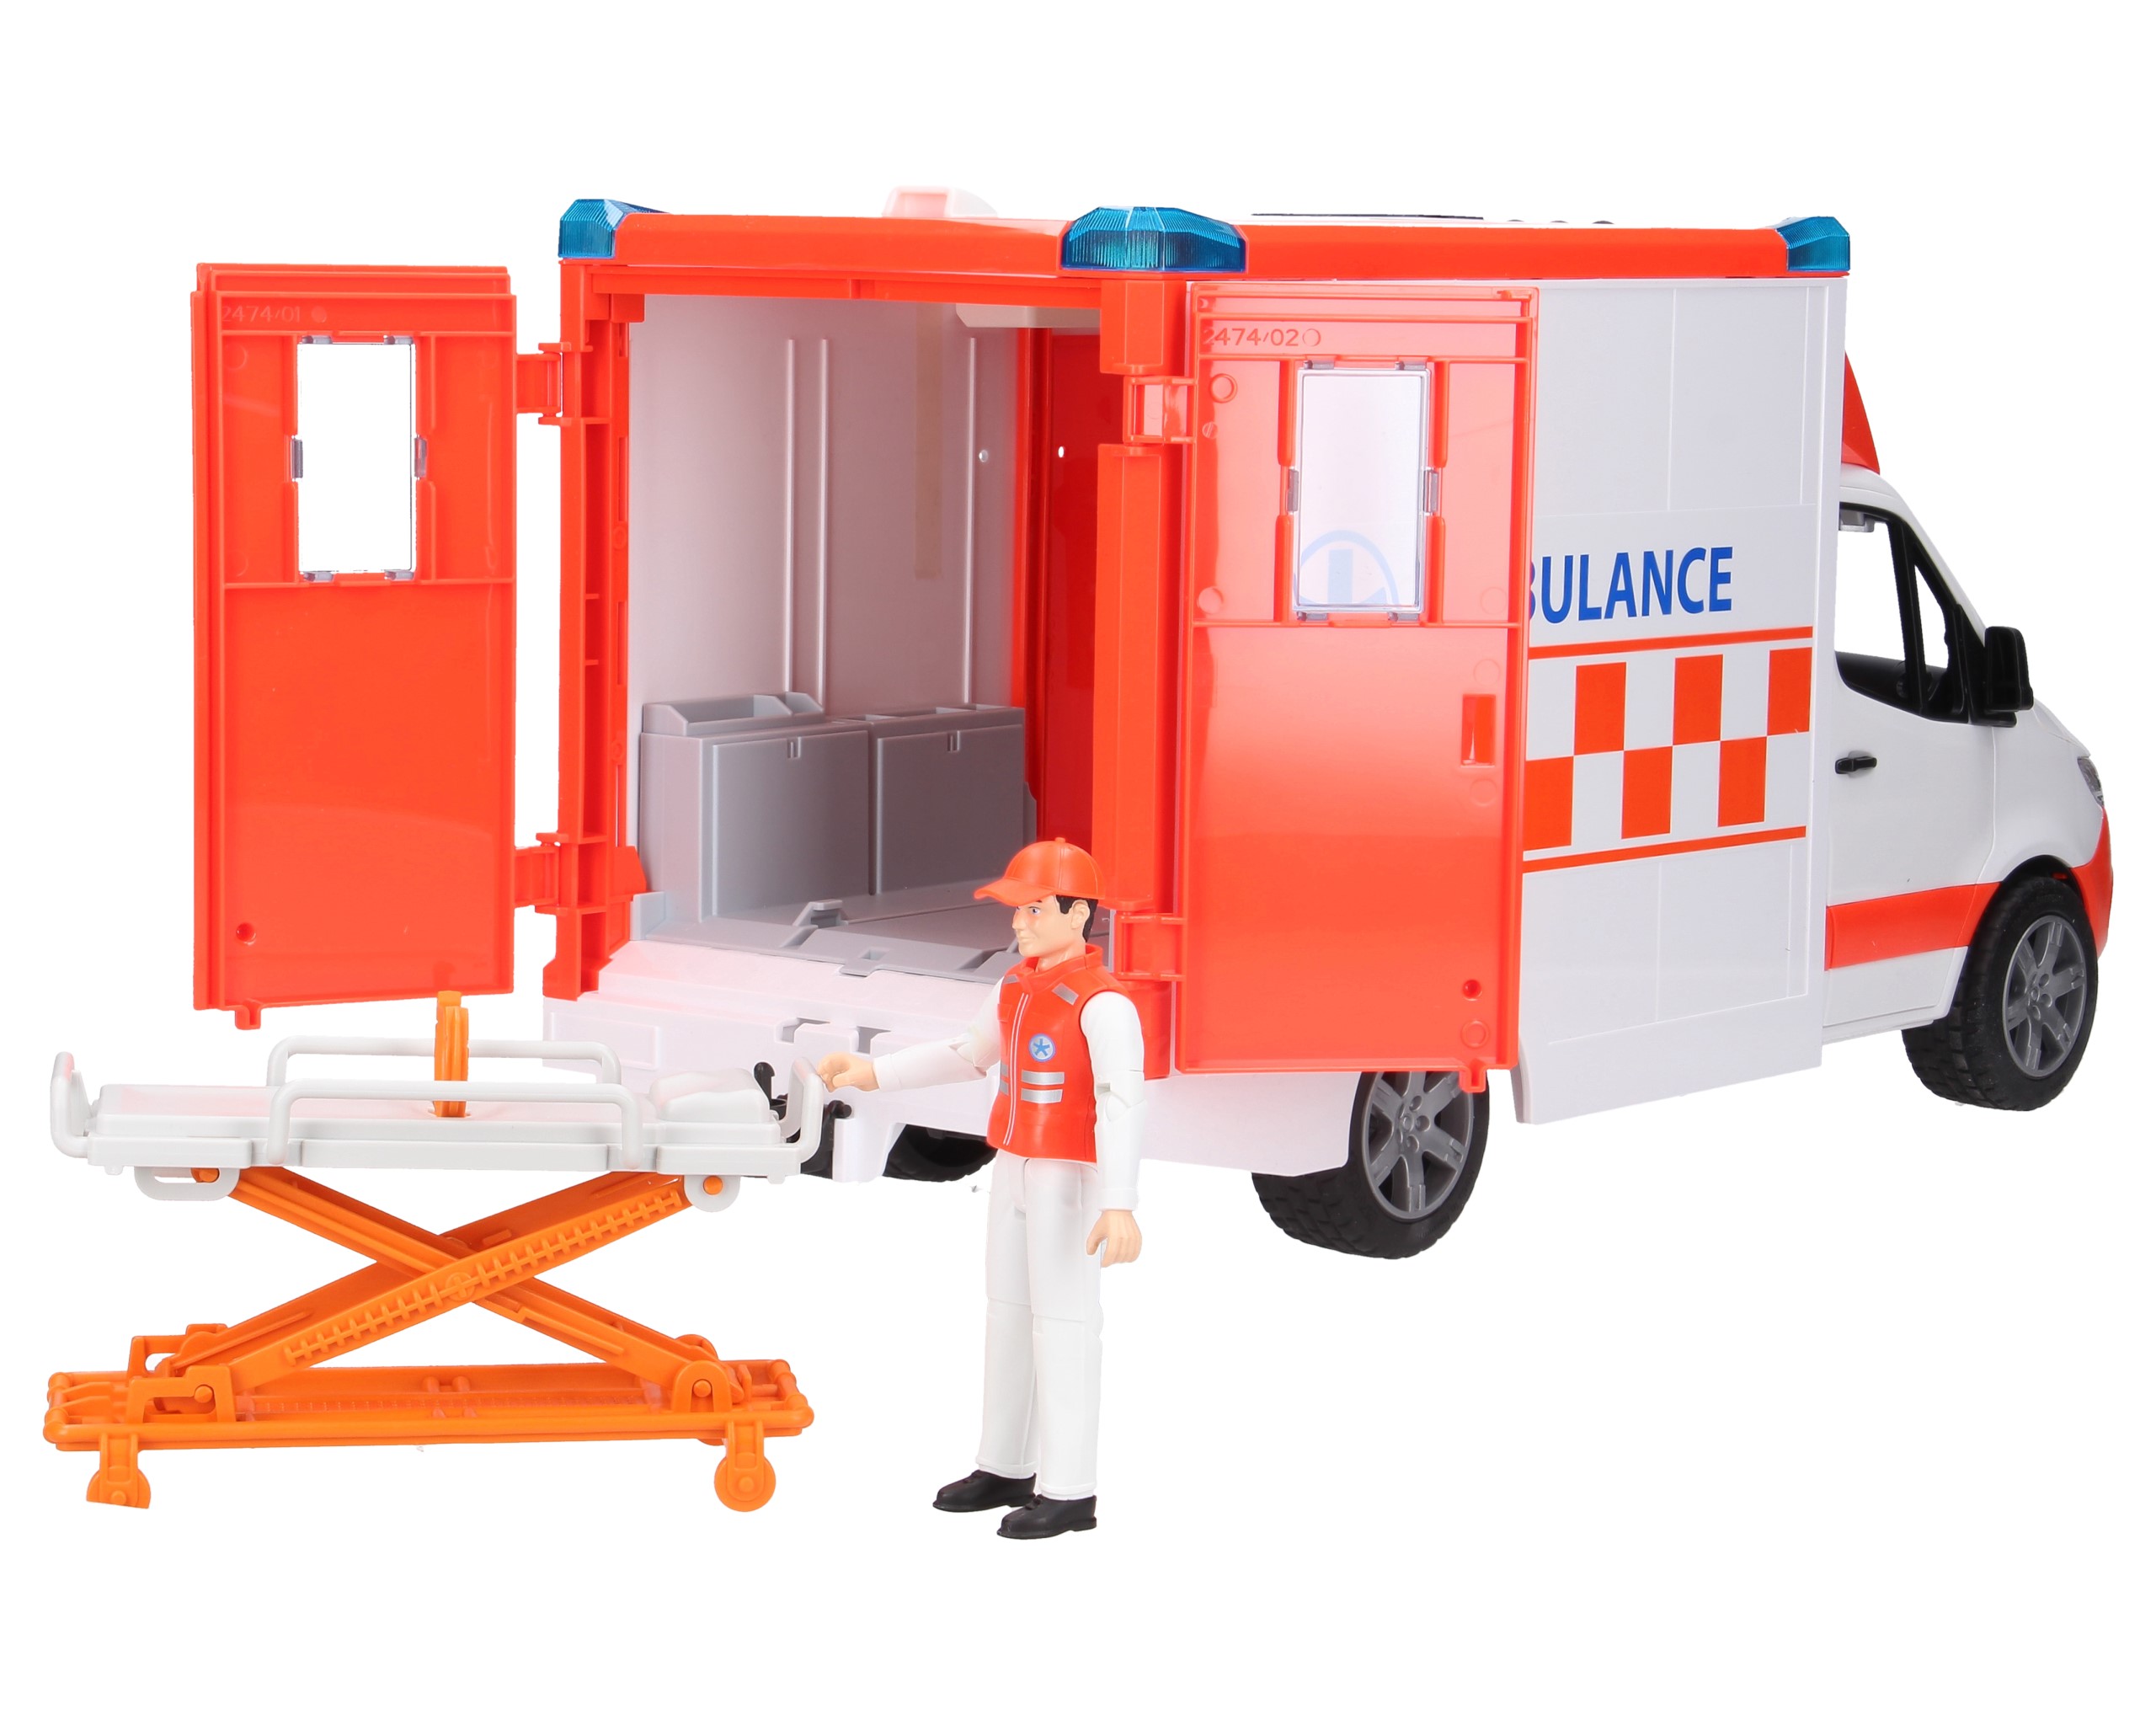 BRUDER 02676 karetka ambulans z figurką ratownika